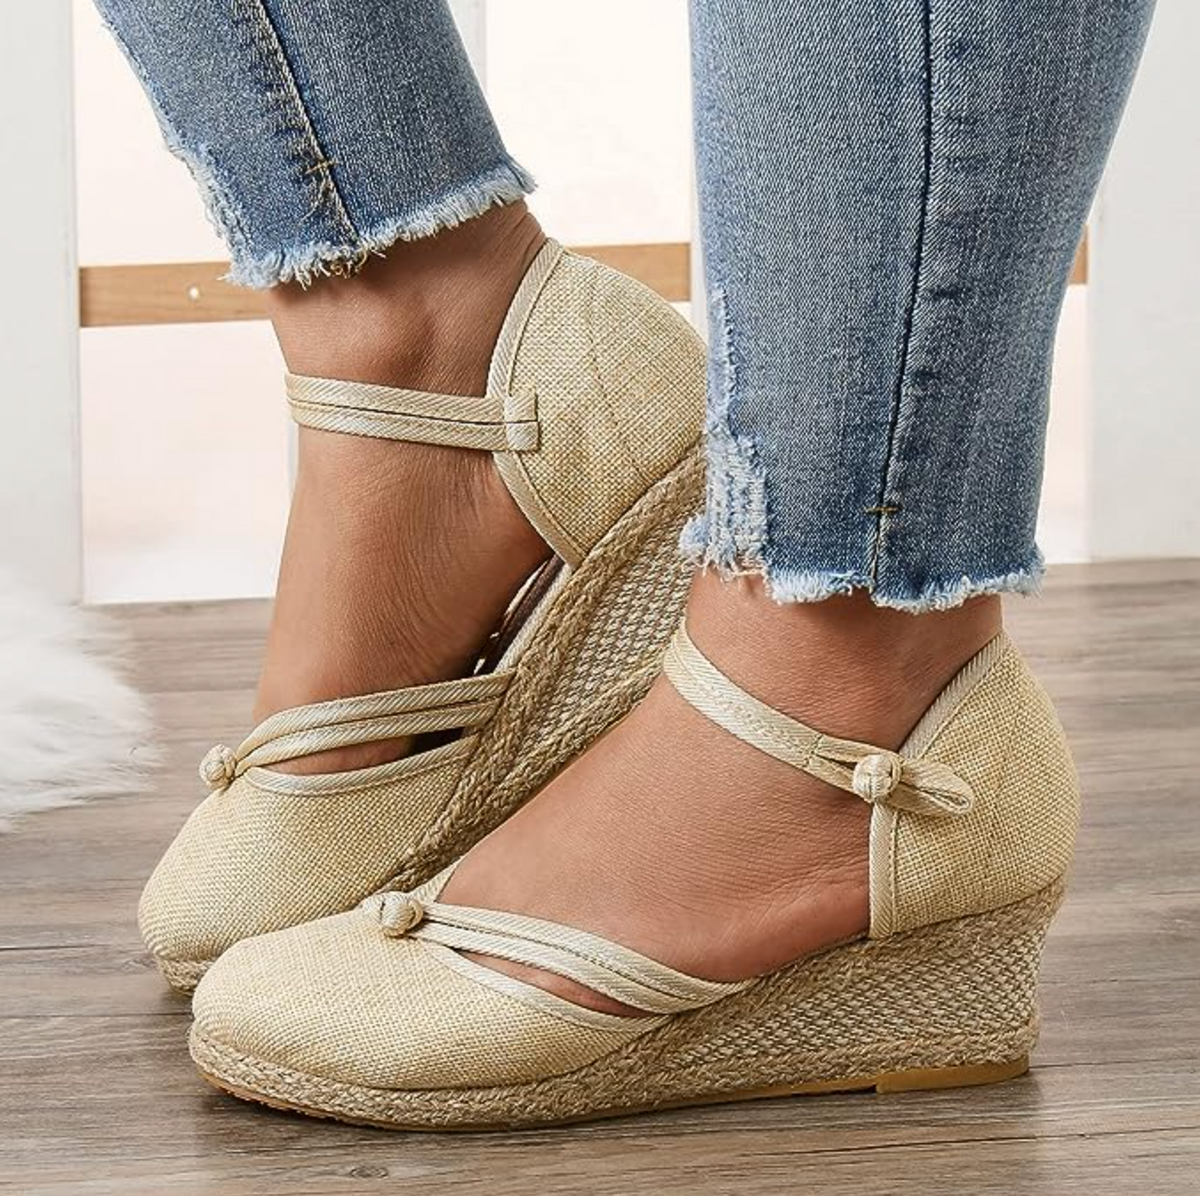 Belifi Women's Sandals Wedge Comfortable Pointed Toe Hemp Braid Buckle